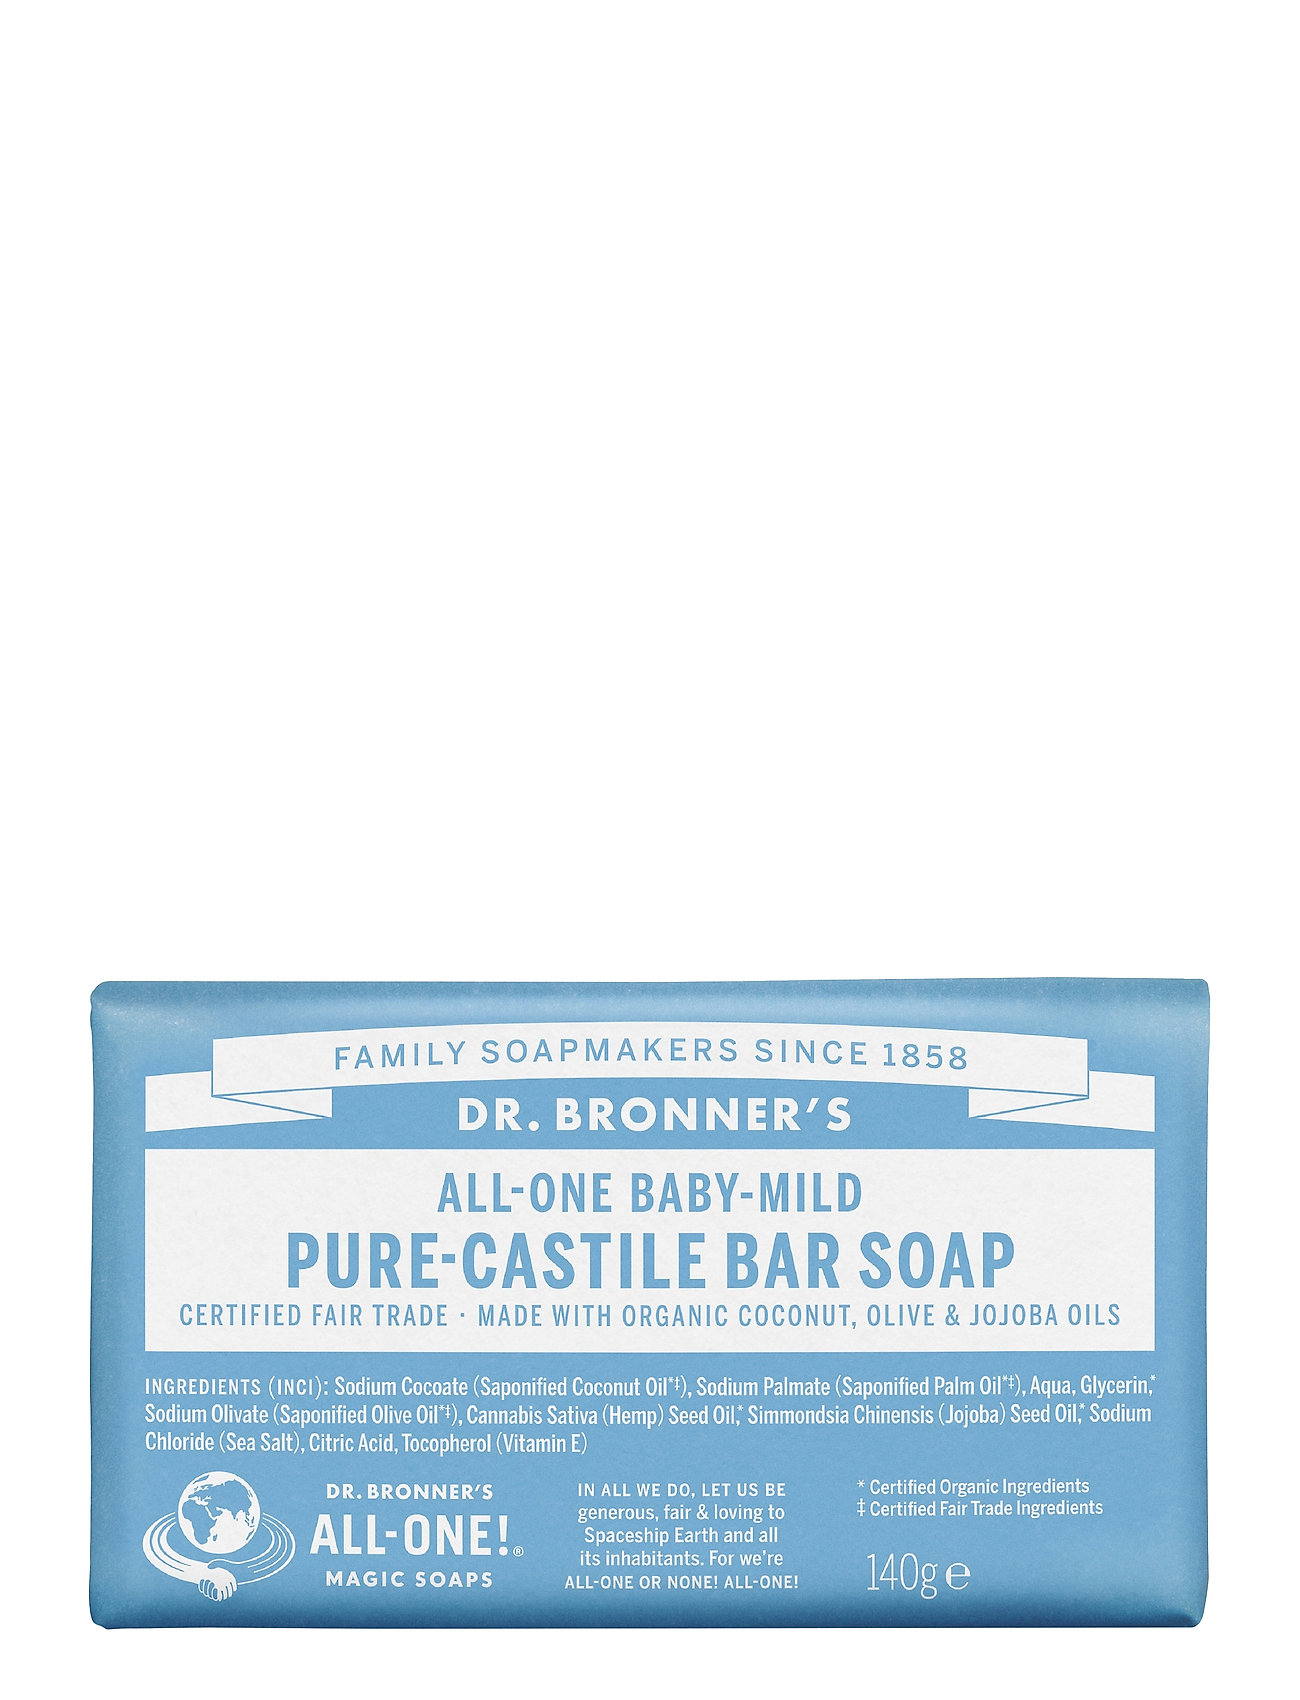 Pure-Castile Bar Soap Baby-Mild  Beauty Women Home Hand Soap Soap Bars Nude Dr. Bronner’s